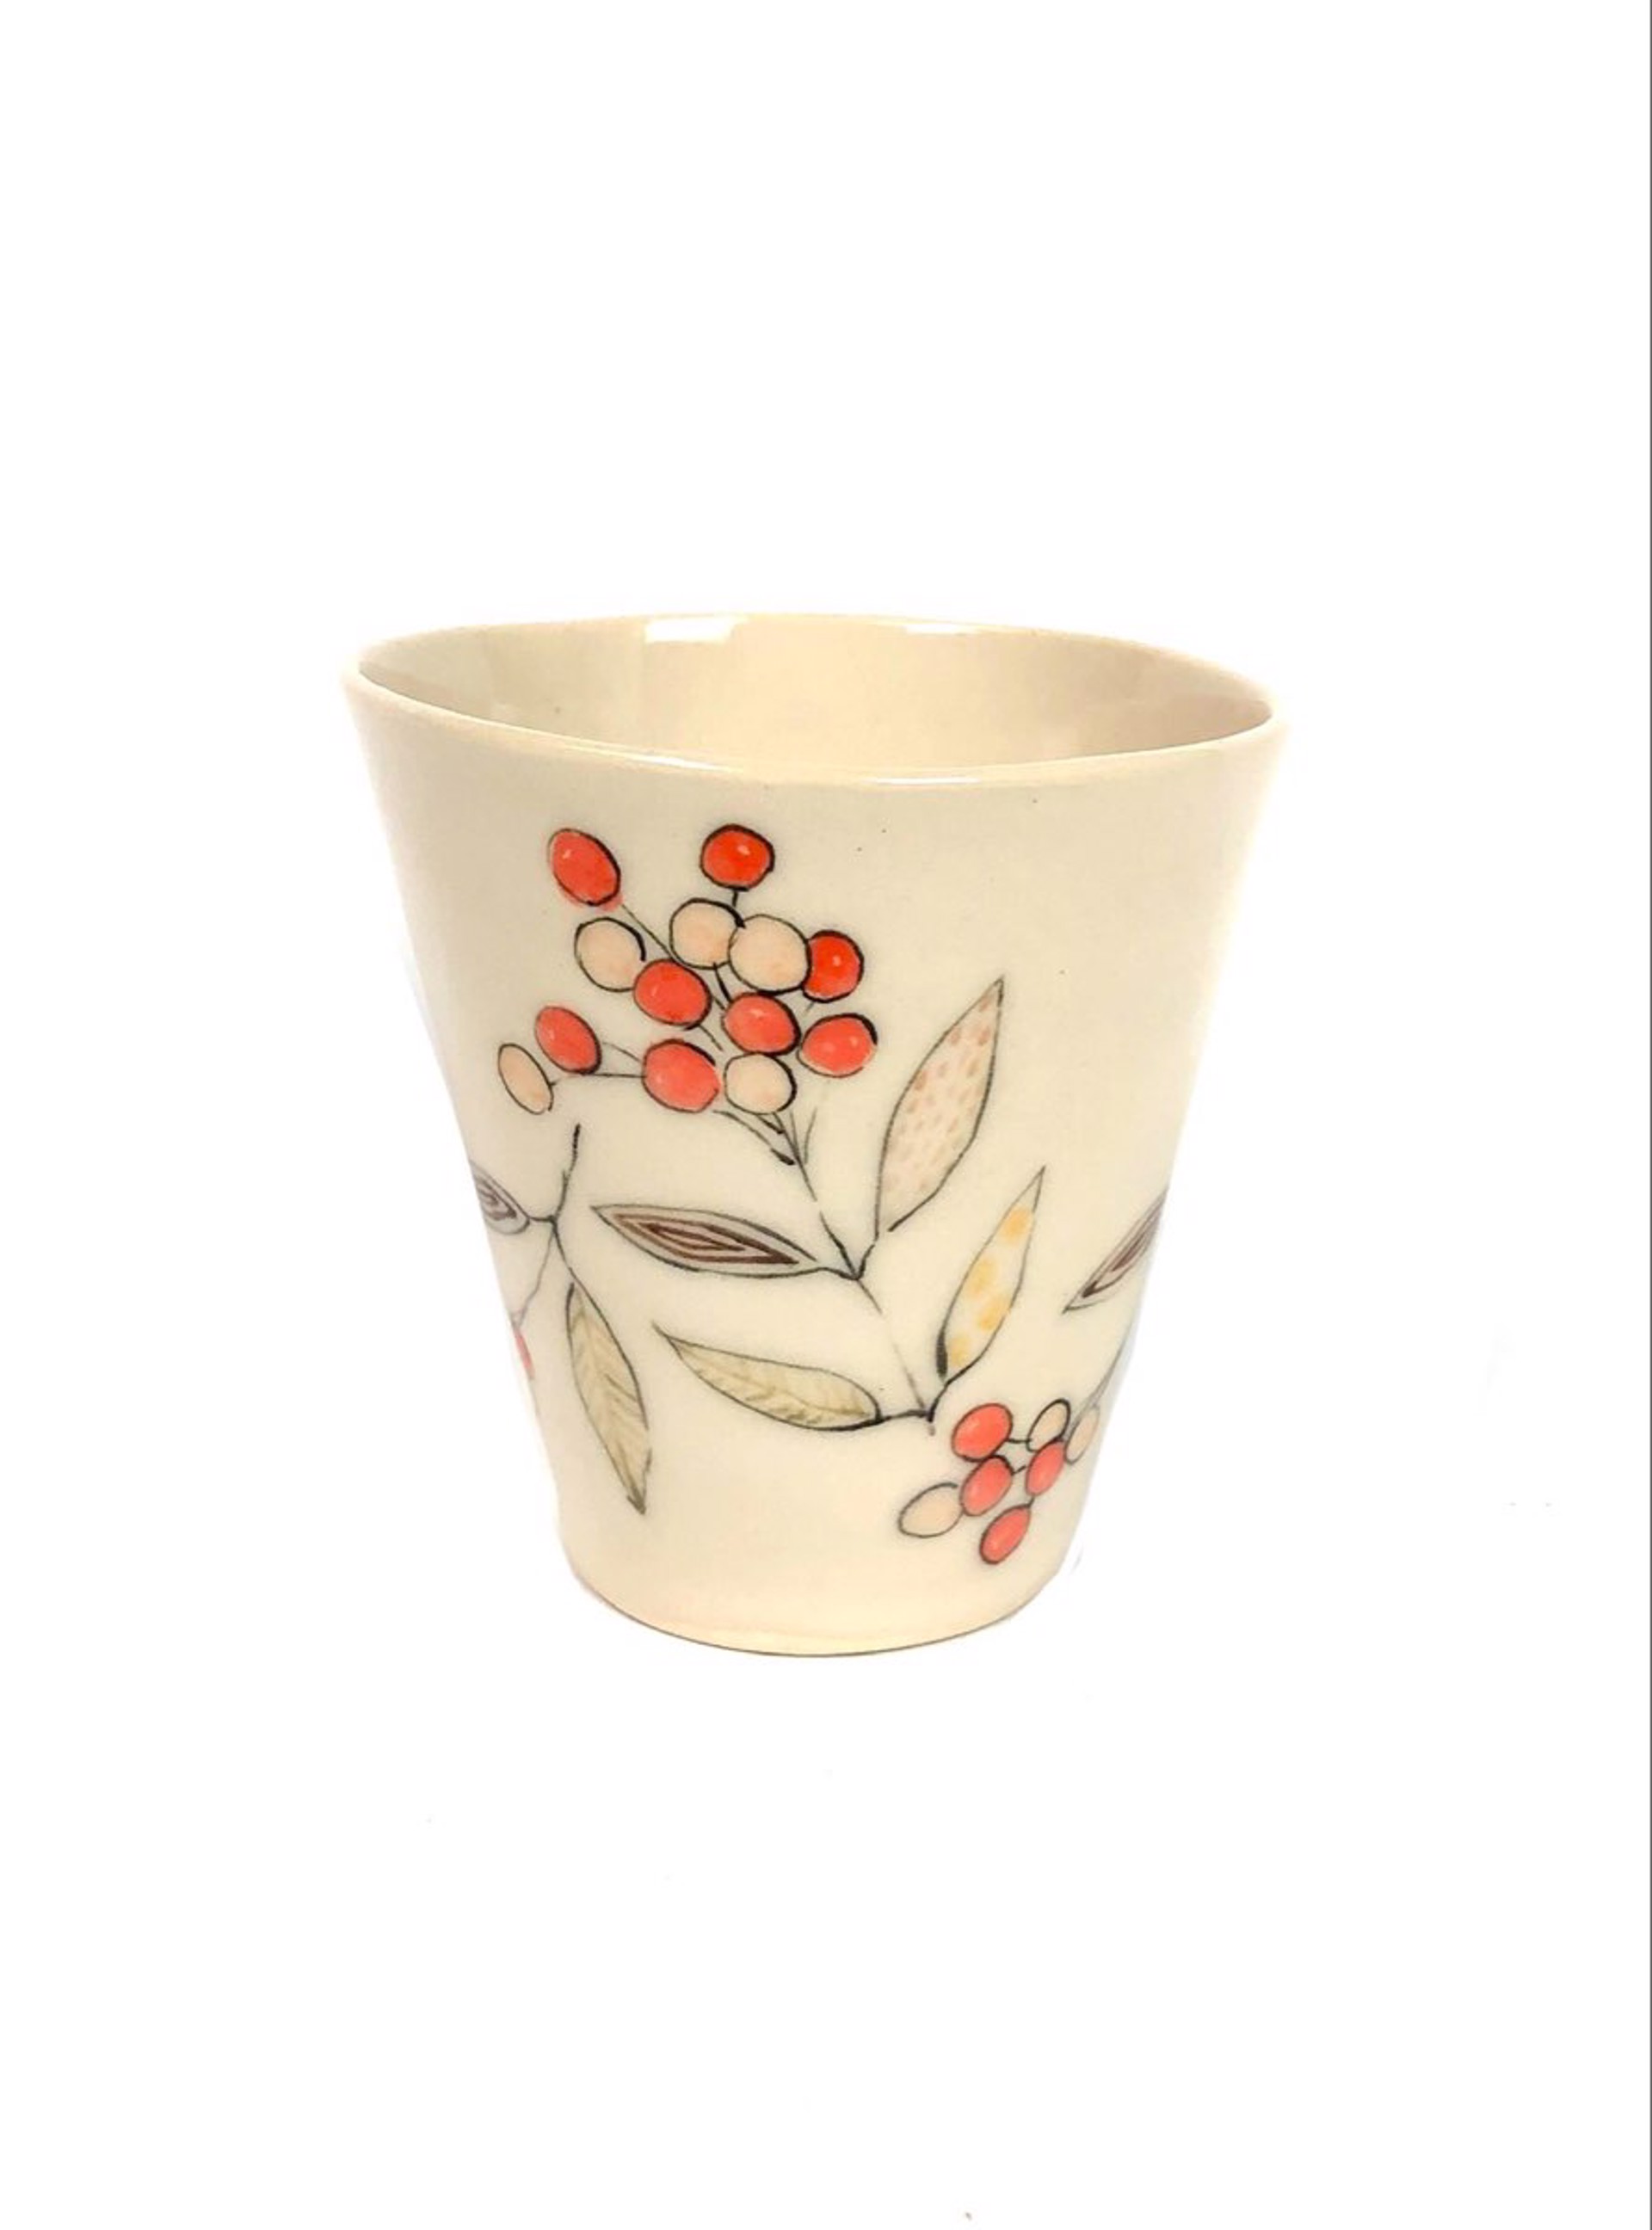 Tall Cup with Orange Berries Design by Mari Kuroda